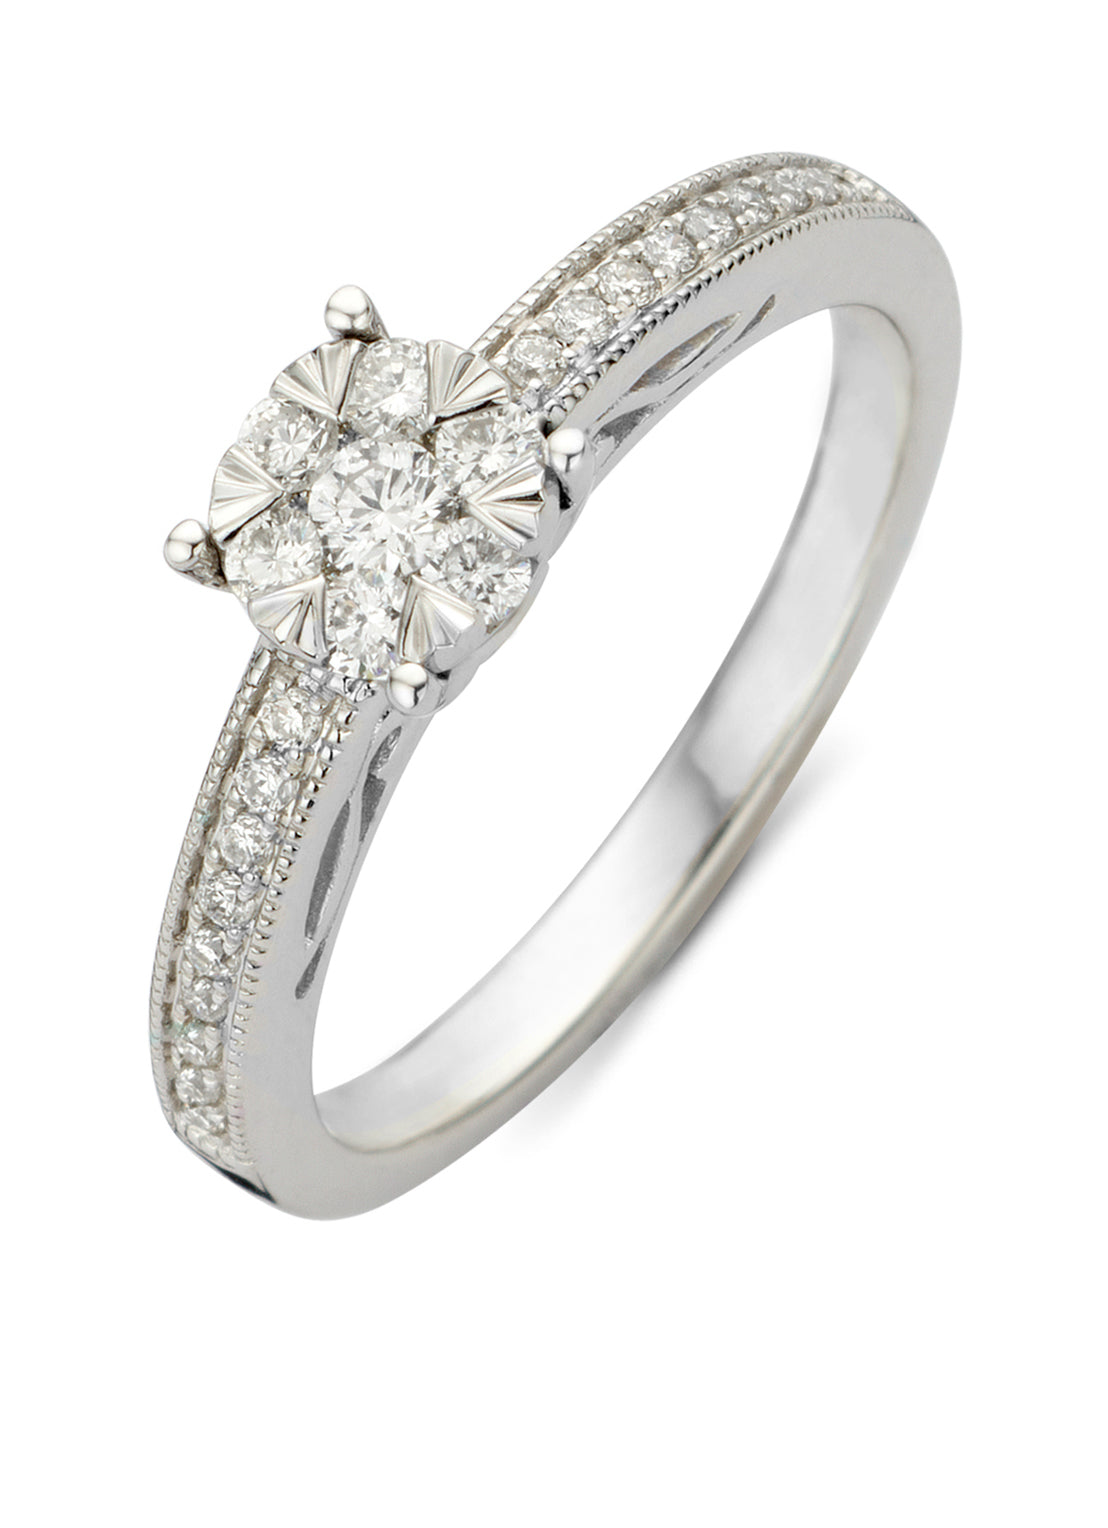 White gold ring, 0.32 CT Diamond, Enchanted